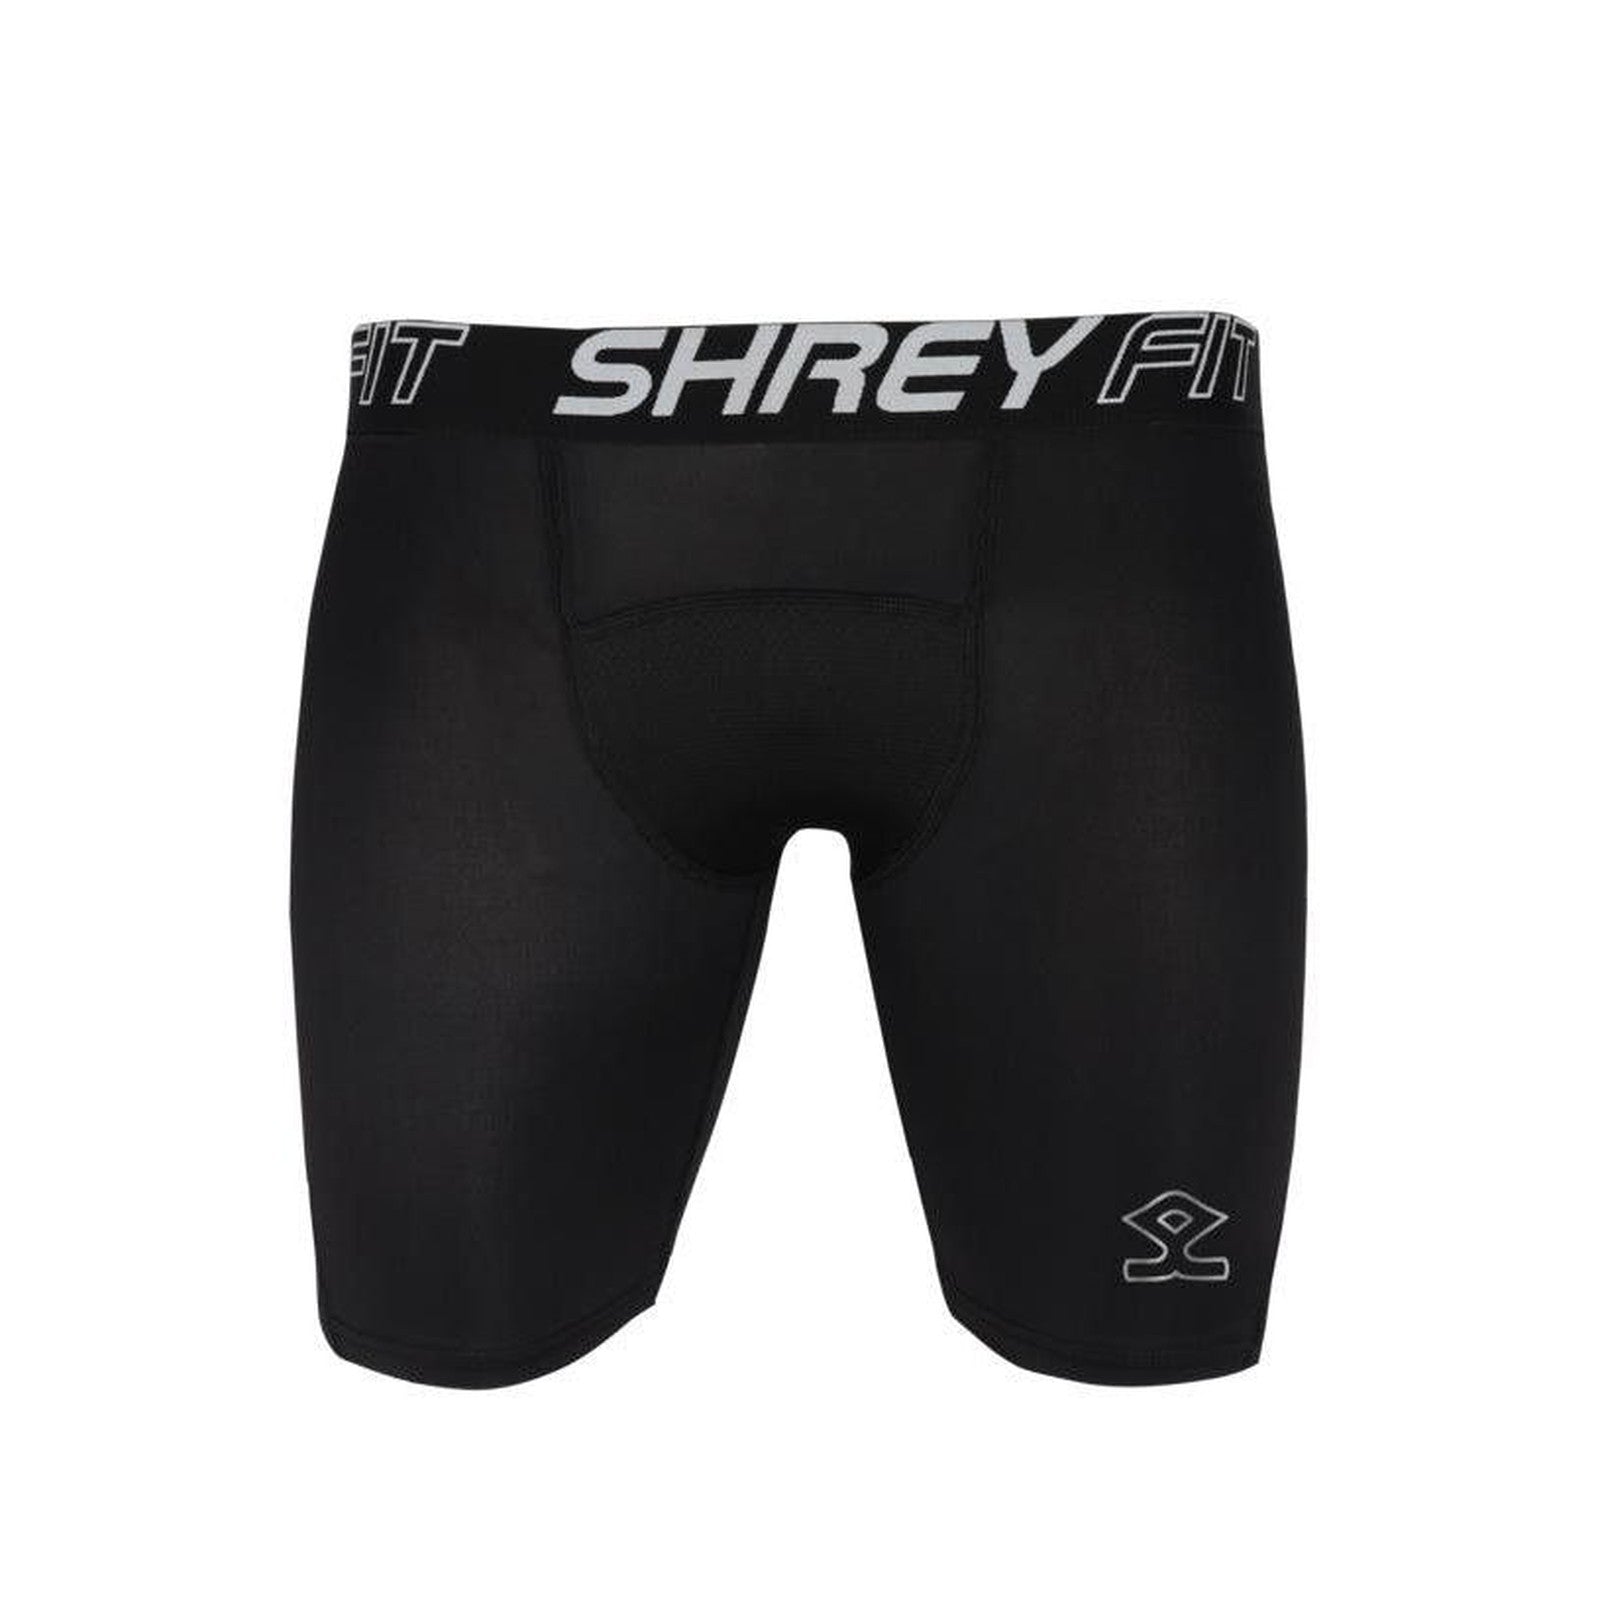 Shrey Intense Baselayer Shorts - Black